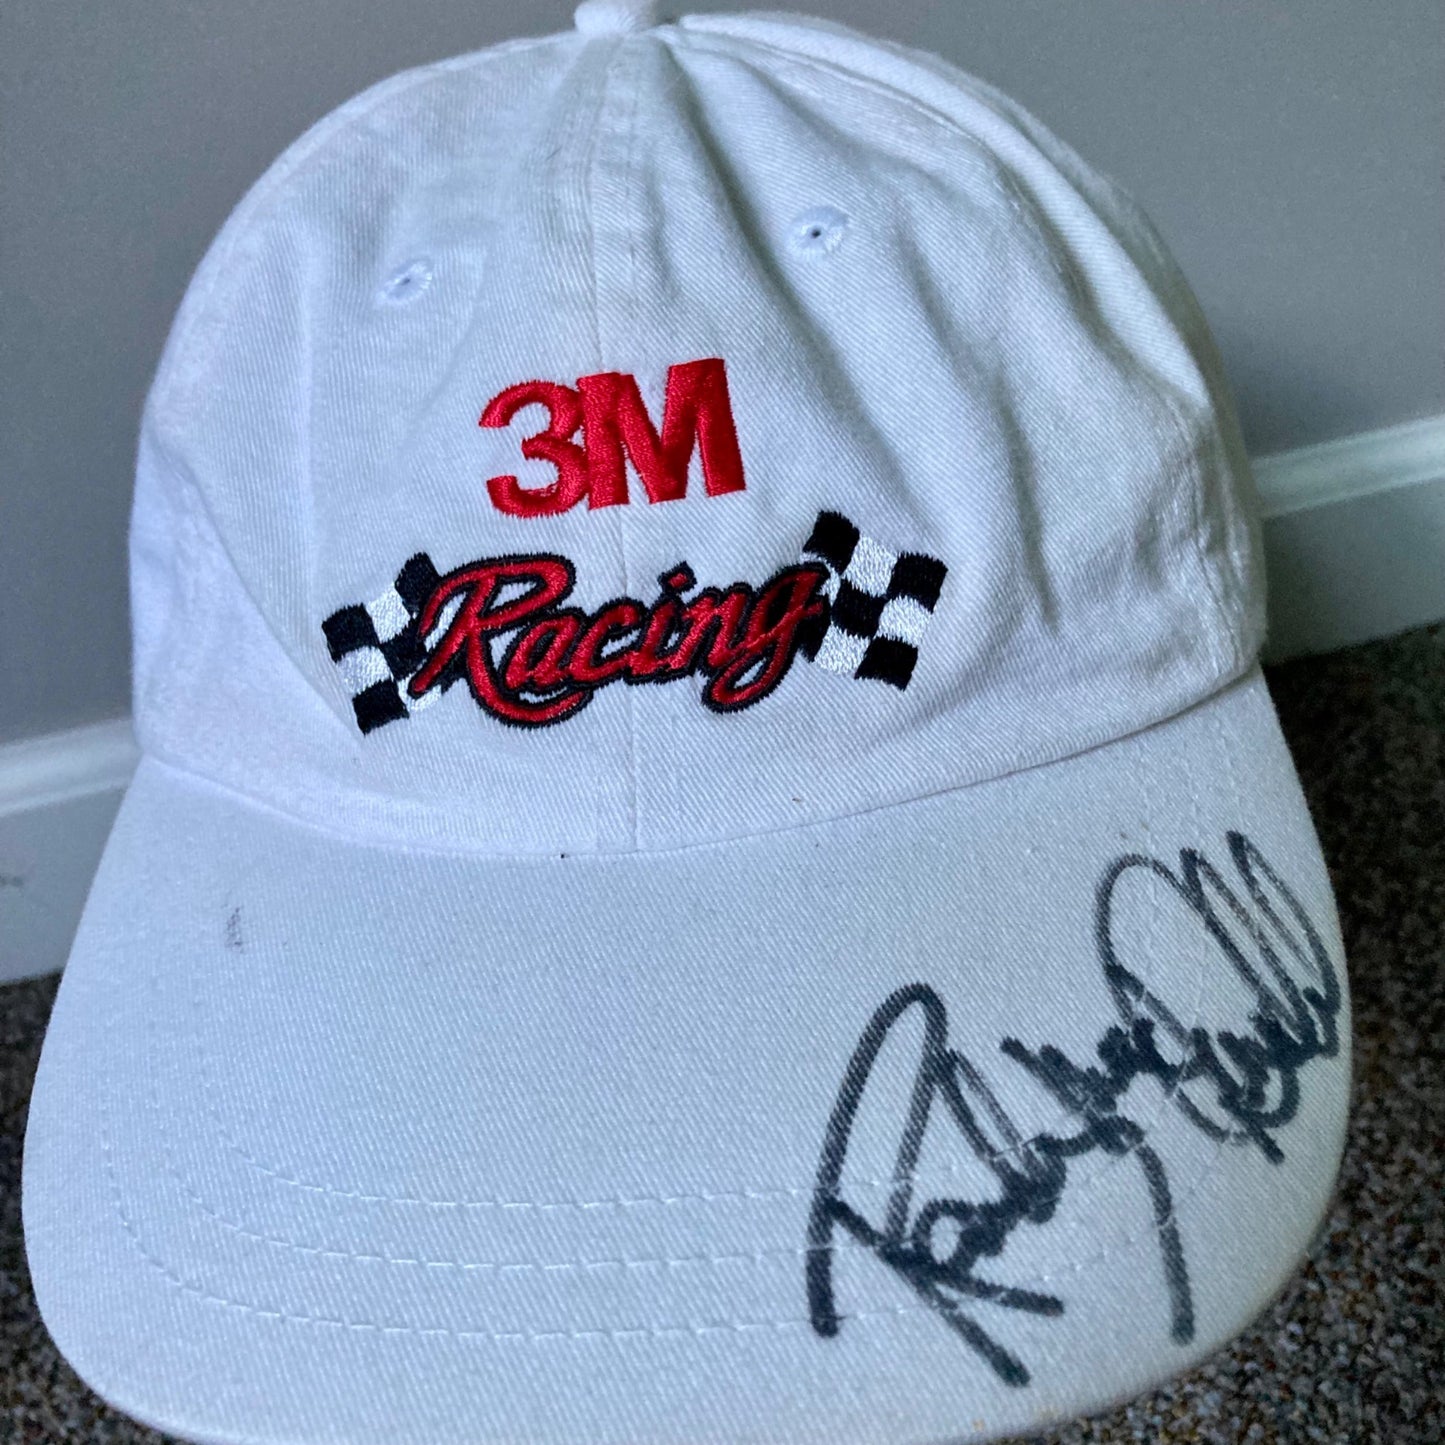 Vintage 3M Racing NASCAR Driver Autographed Hat Signed Cap